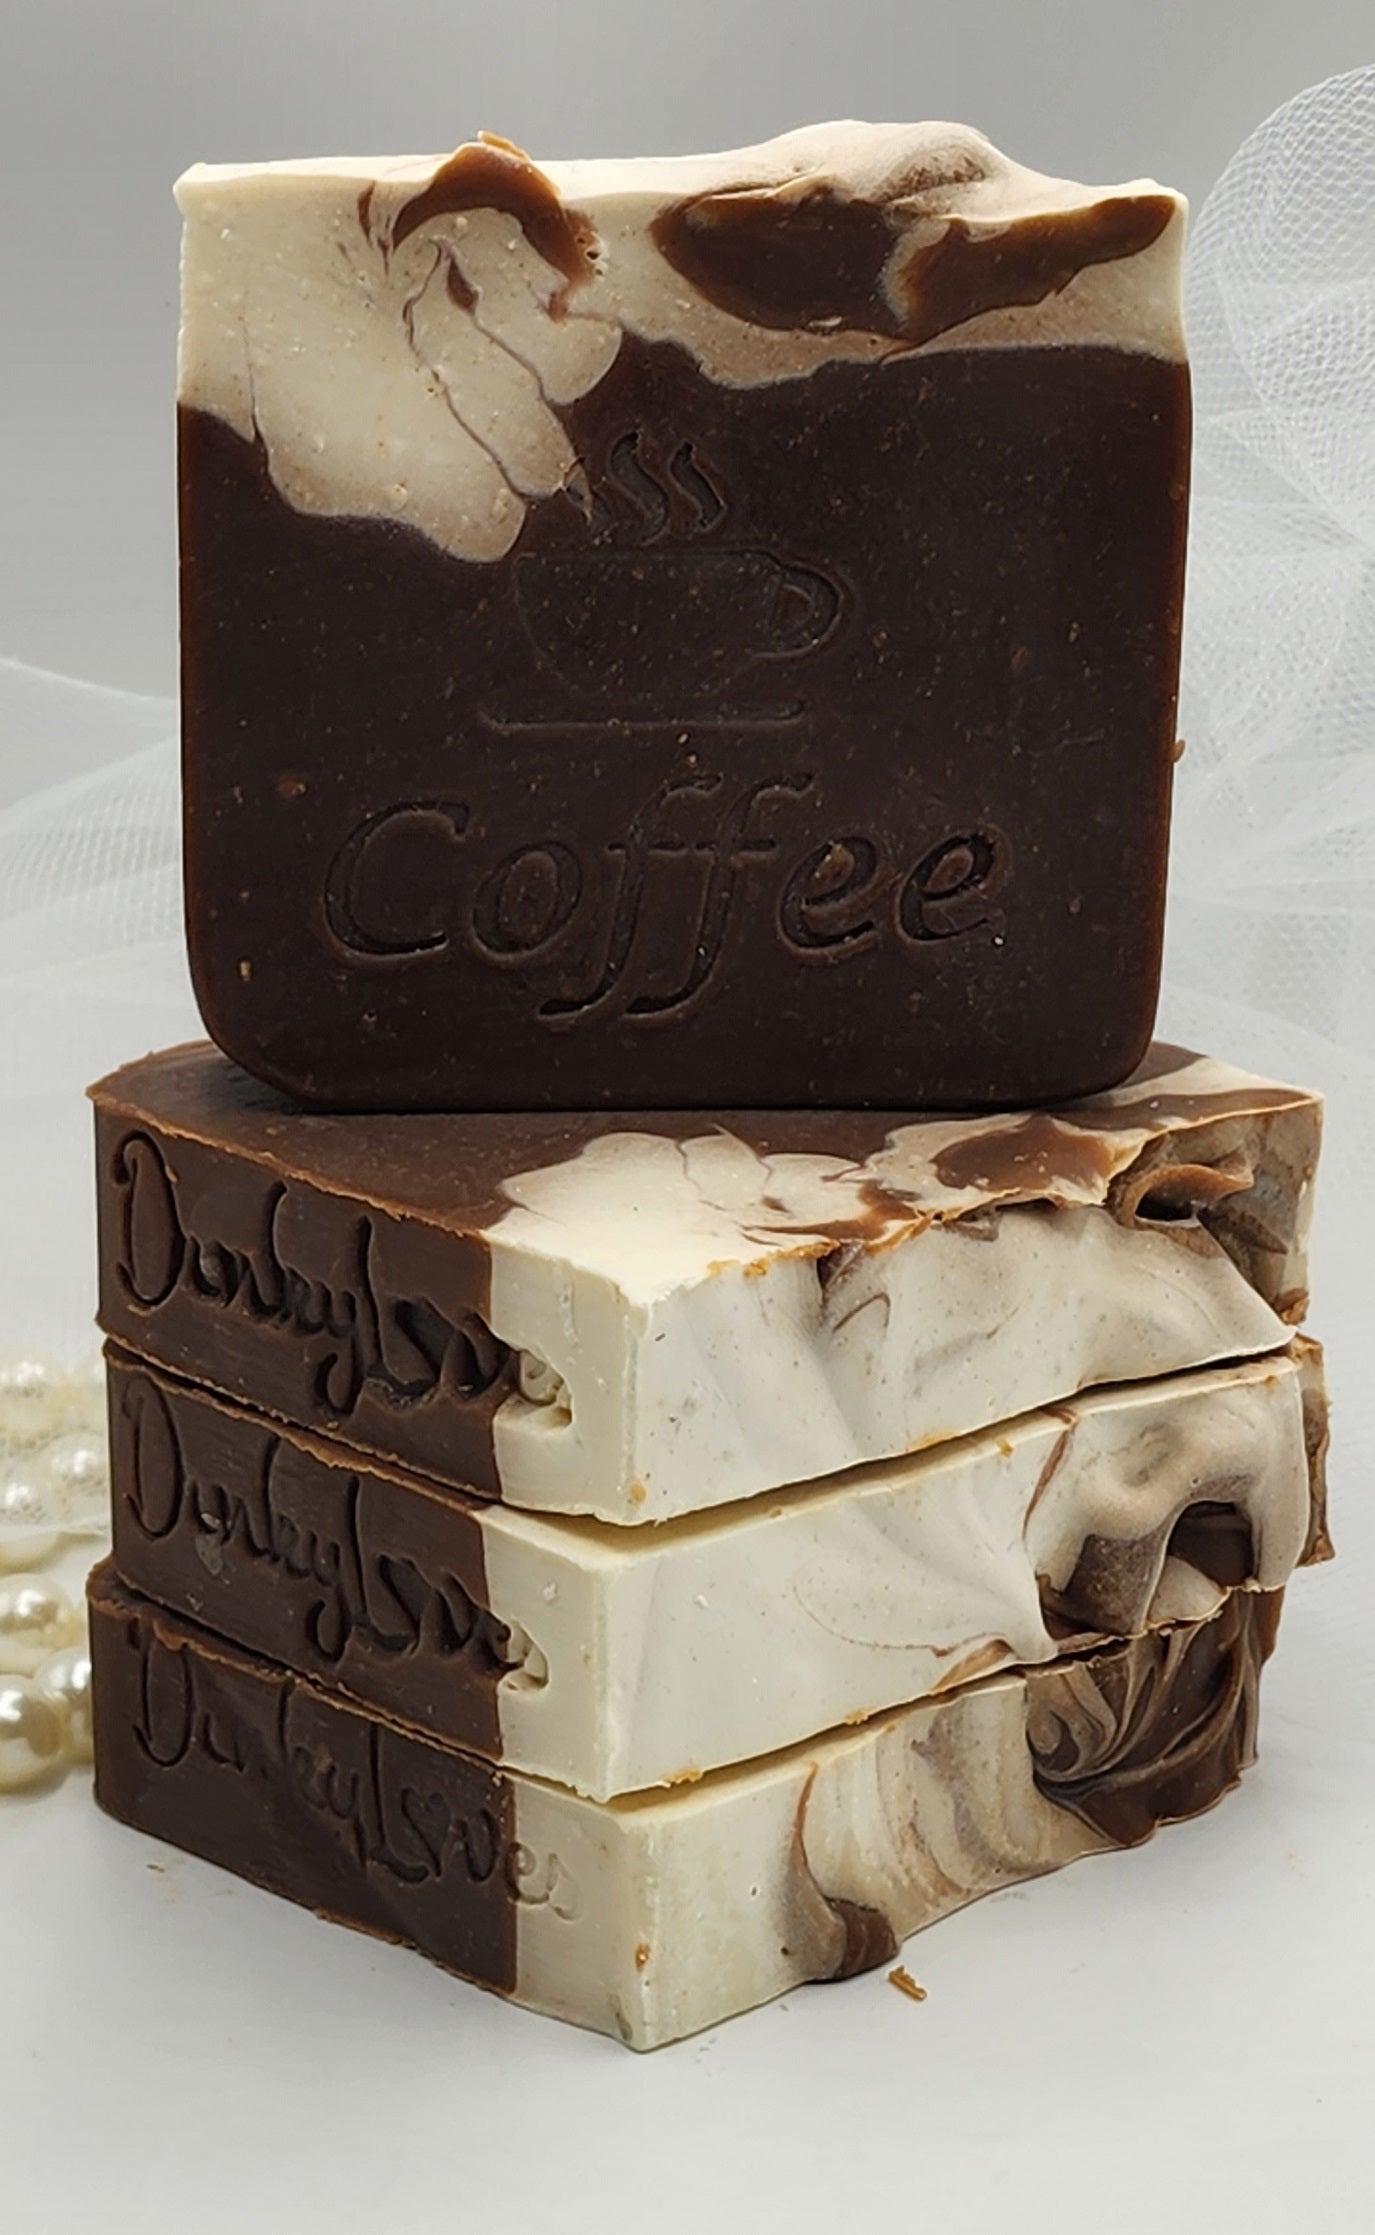 CARAMEL COFFEE / GOAT'S MILK SOAP / FALL SOAPS / AUTUMN SOAP / Bar Soap / Gift Soap / Gift Idea / Handmade Soap / Cold Process Soap